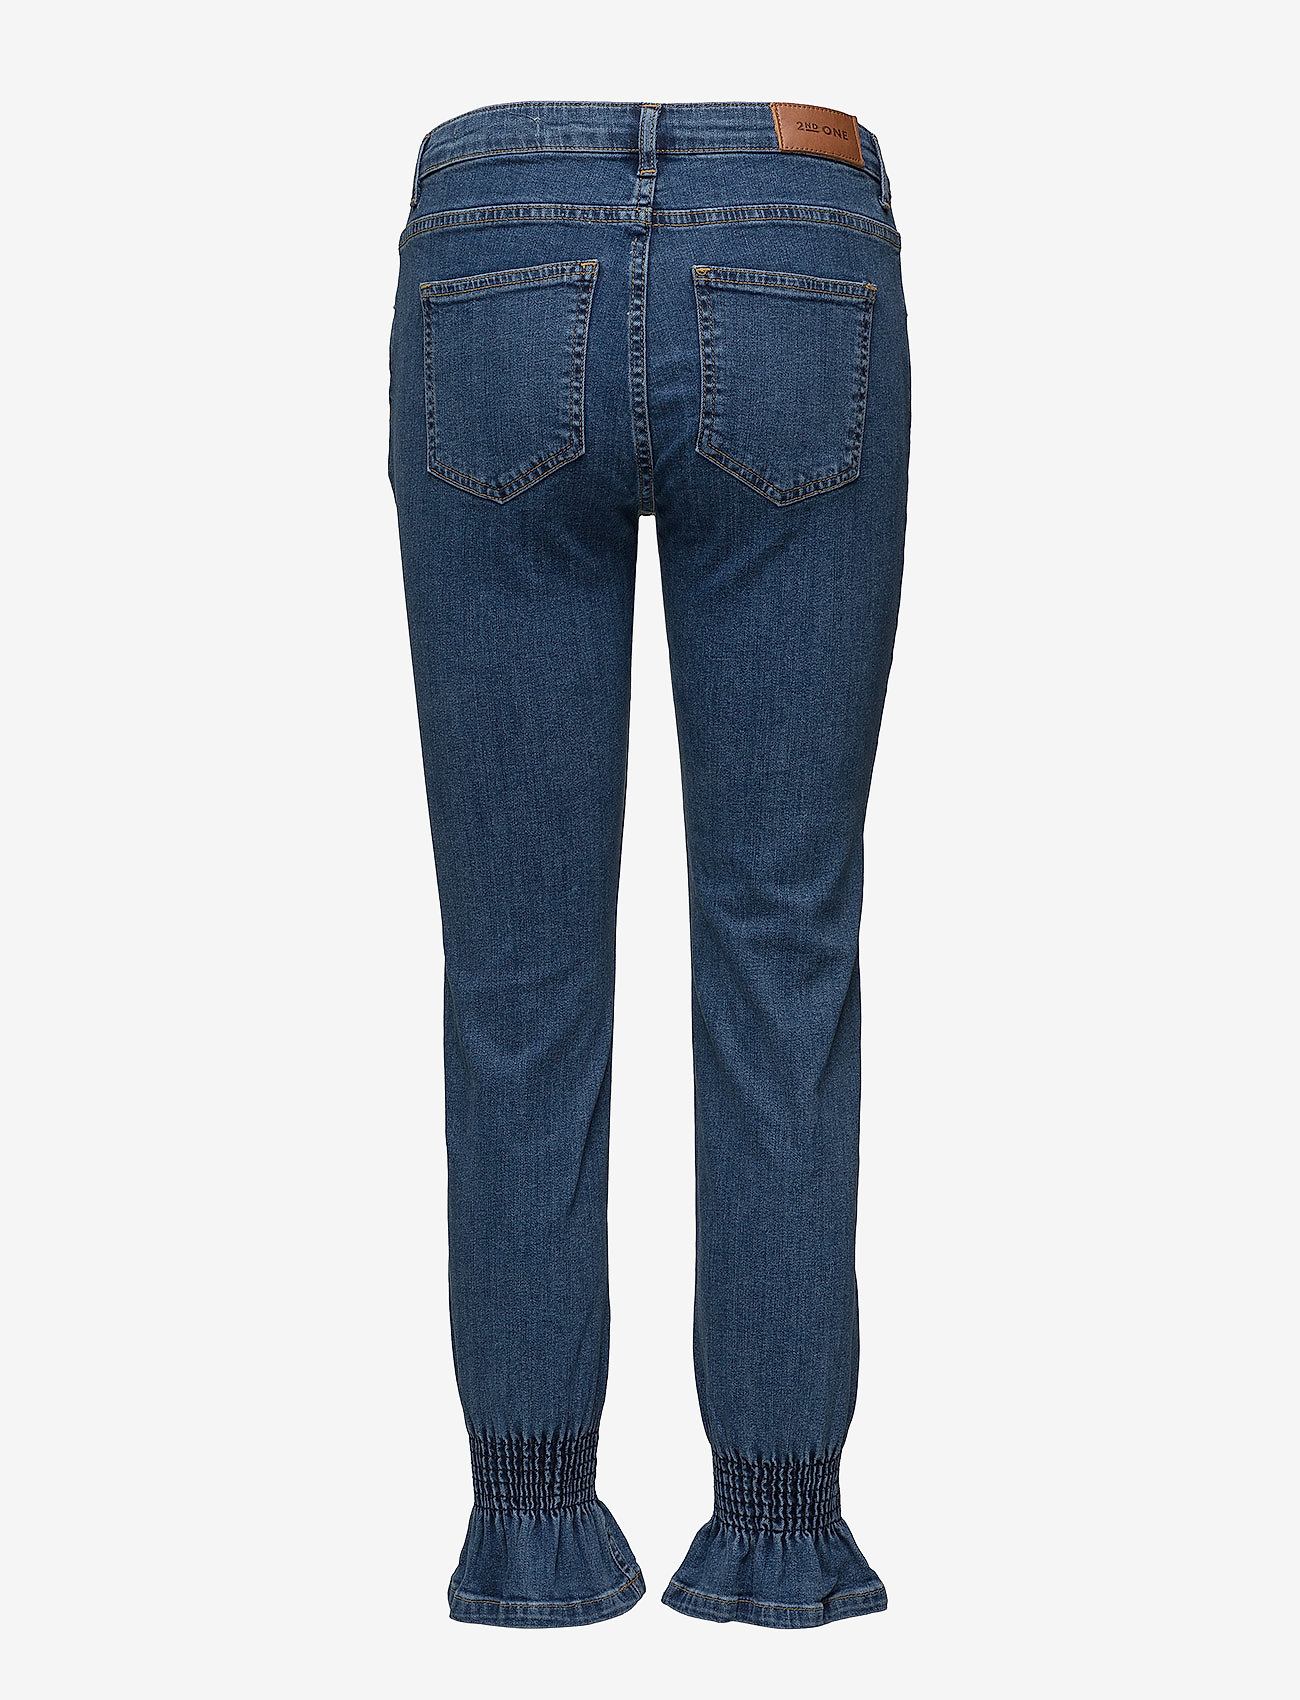 2nd One - Nicole 829 Crop, Blue Clarity Smock, Jeans - džinsa bikses ar tievām starām - blue clarity smock - 1